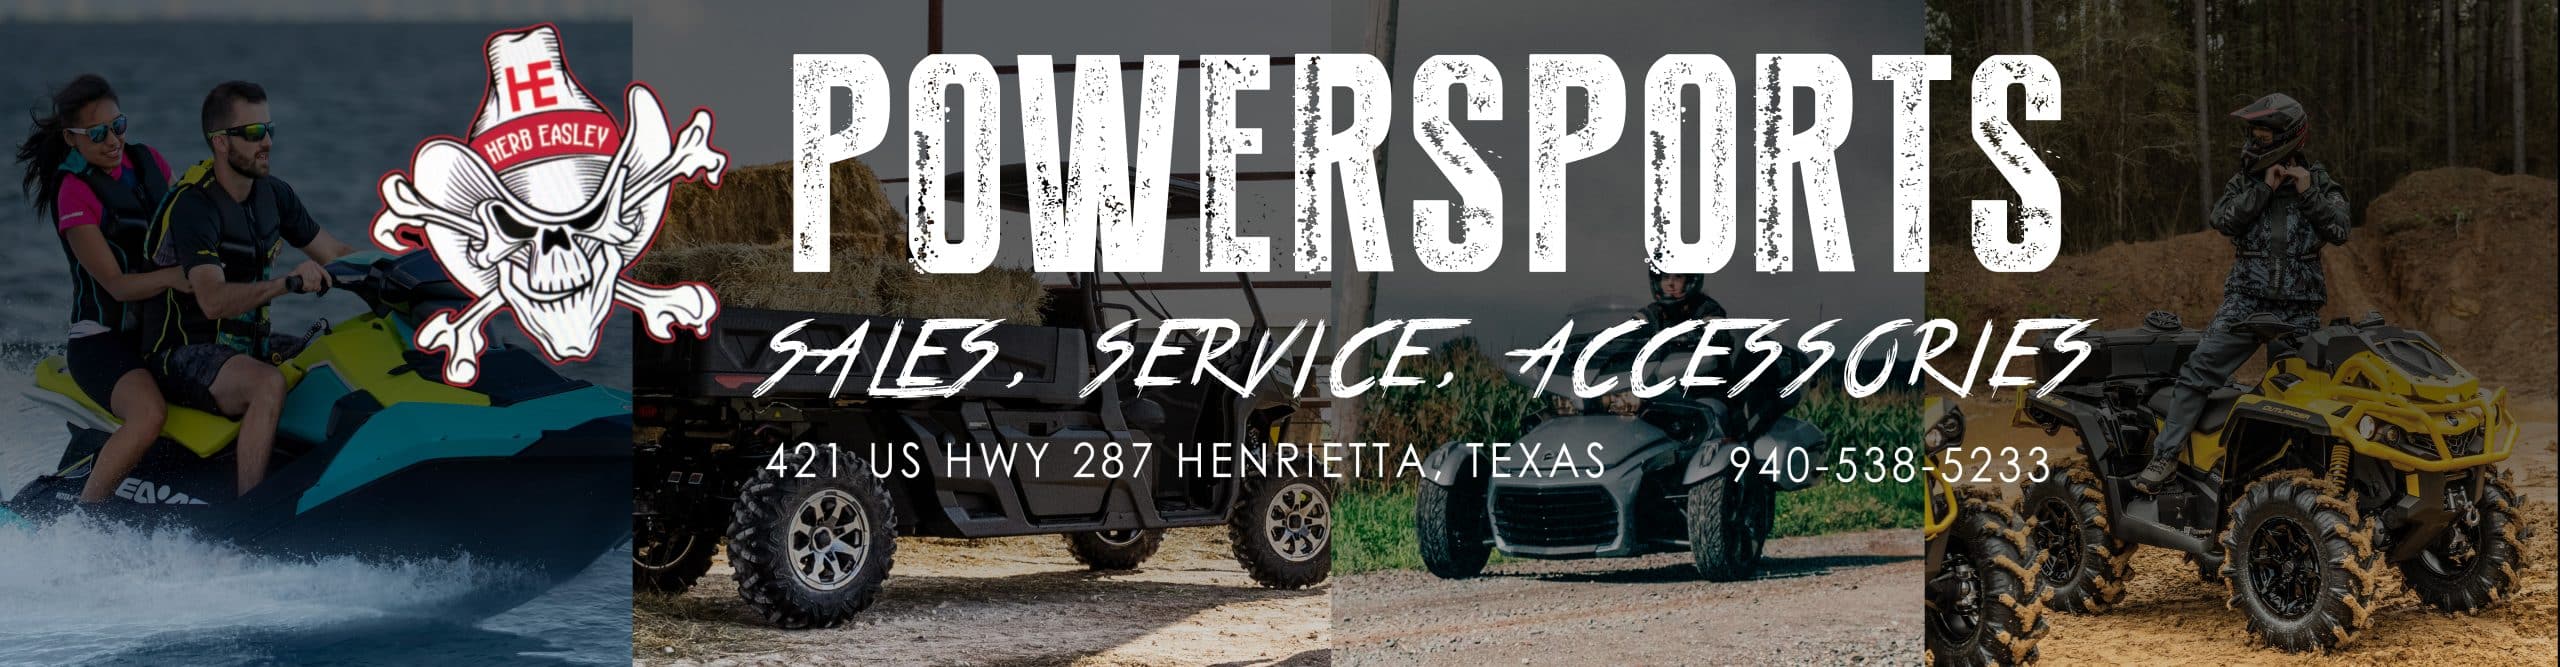 HEPowersports_Sales-Service-Accessories